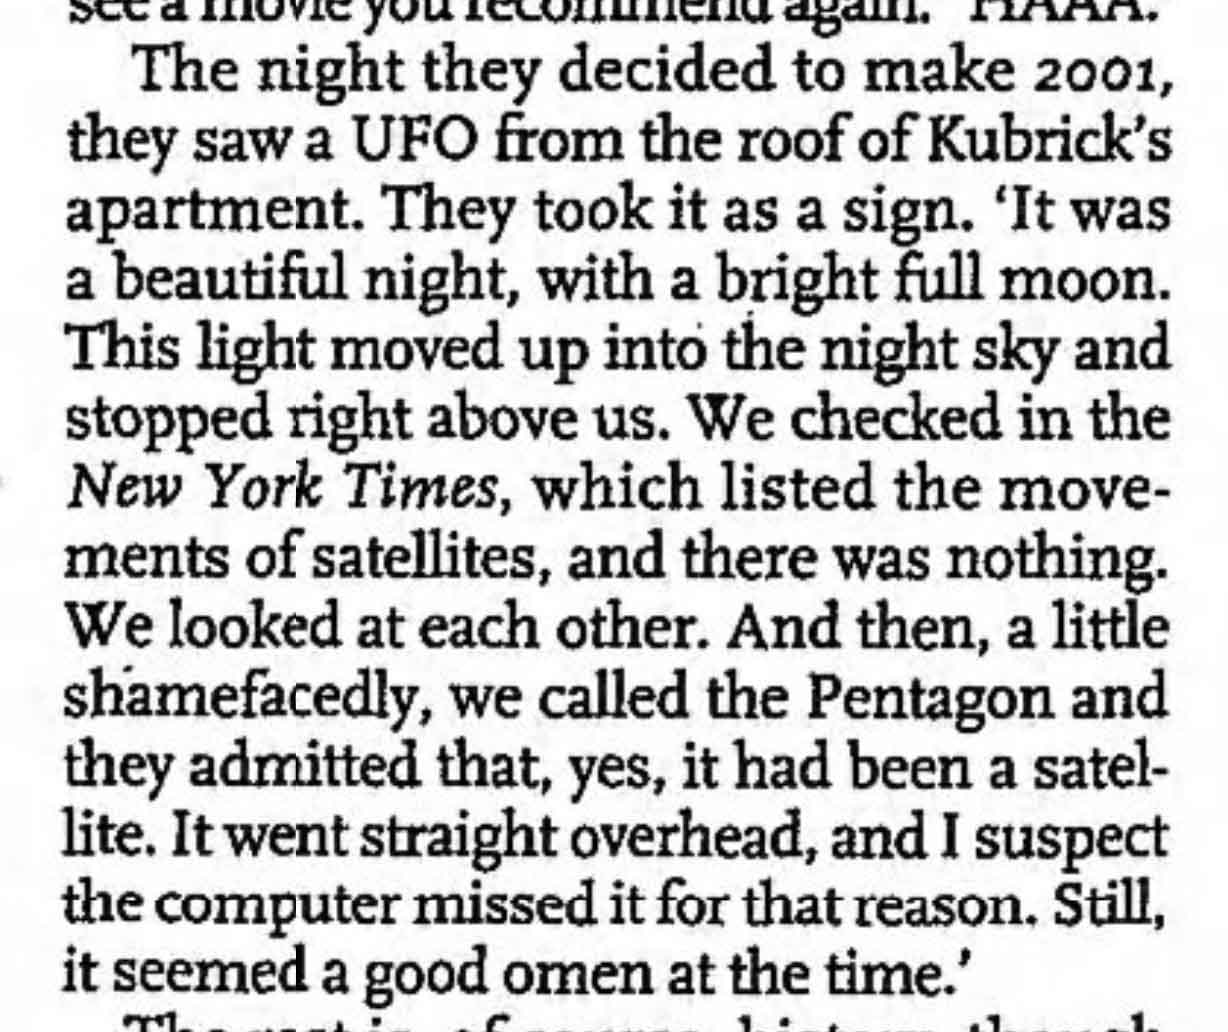 Excerpt from The Observer Magazine on Kubrick Clarke UFO sighting